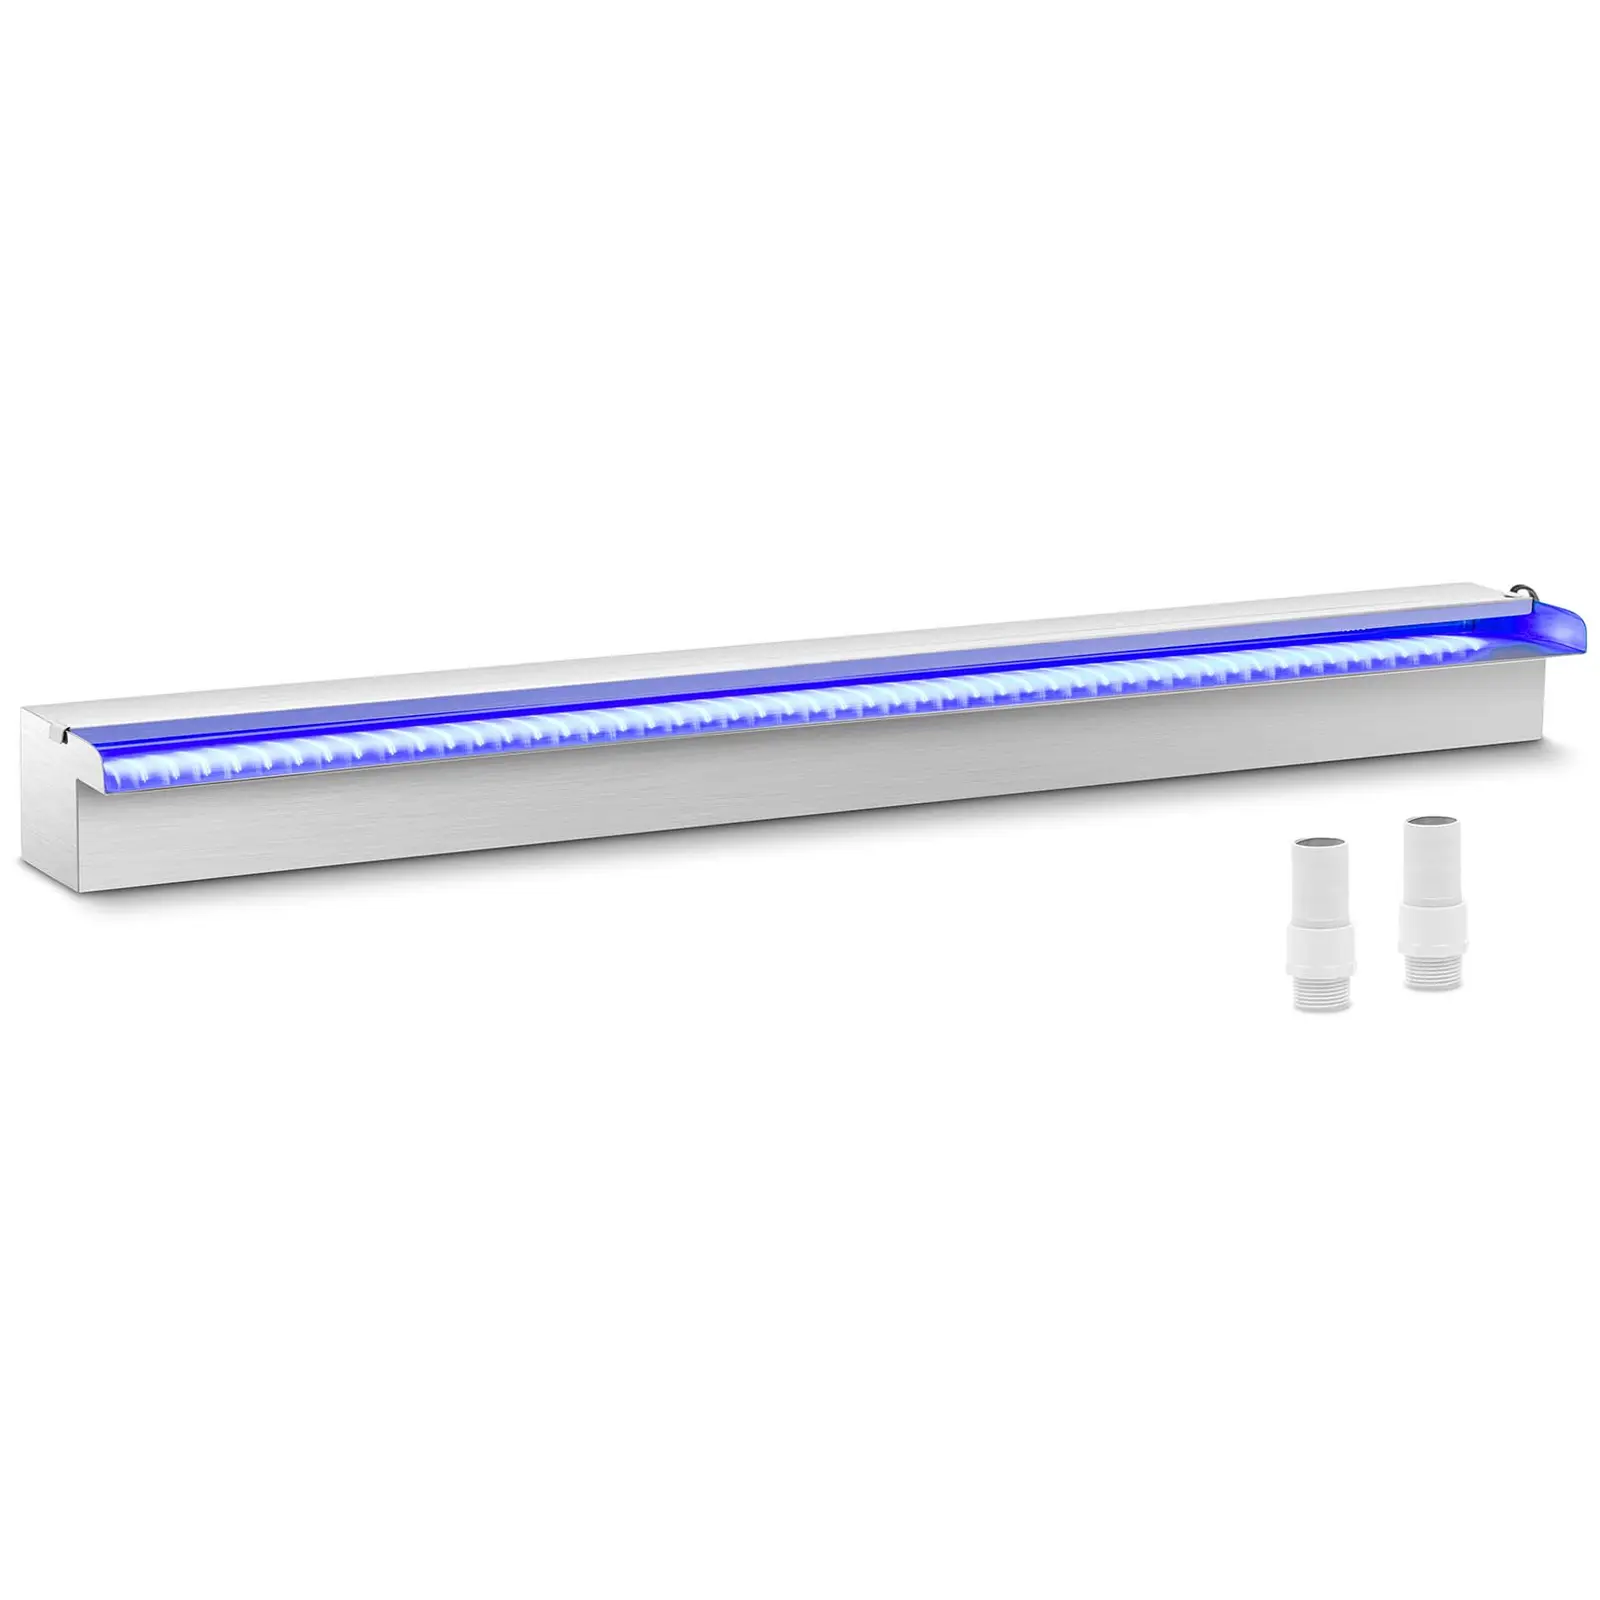 Cascata da giardino - 90 cm - Illuminazione LED - Blu, bianca